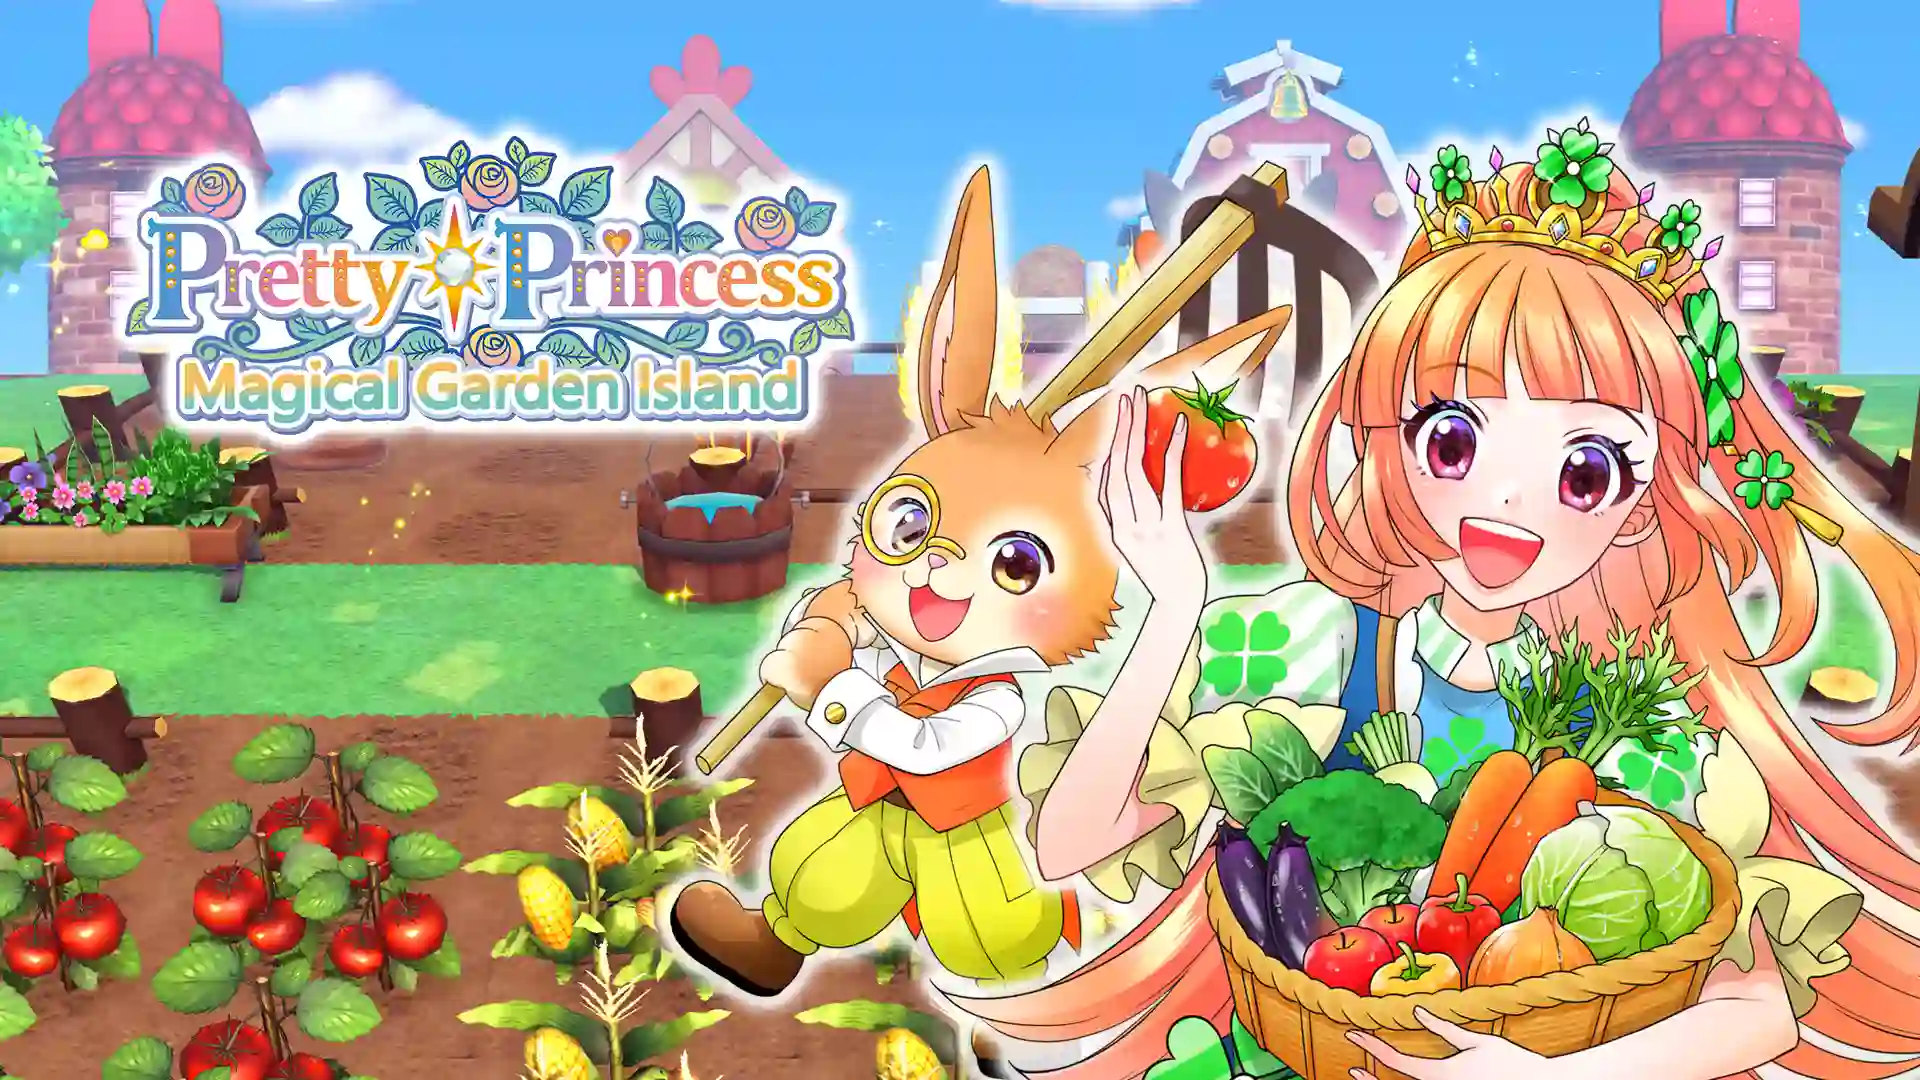 Pretty Princess Magical Garden Island arribarà en format físic a Nintendo Switch